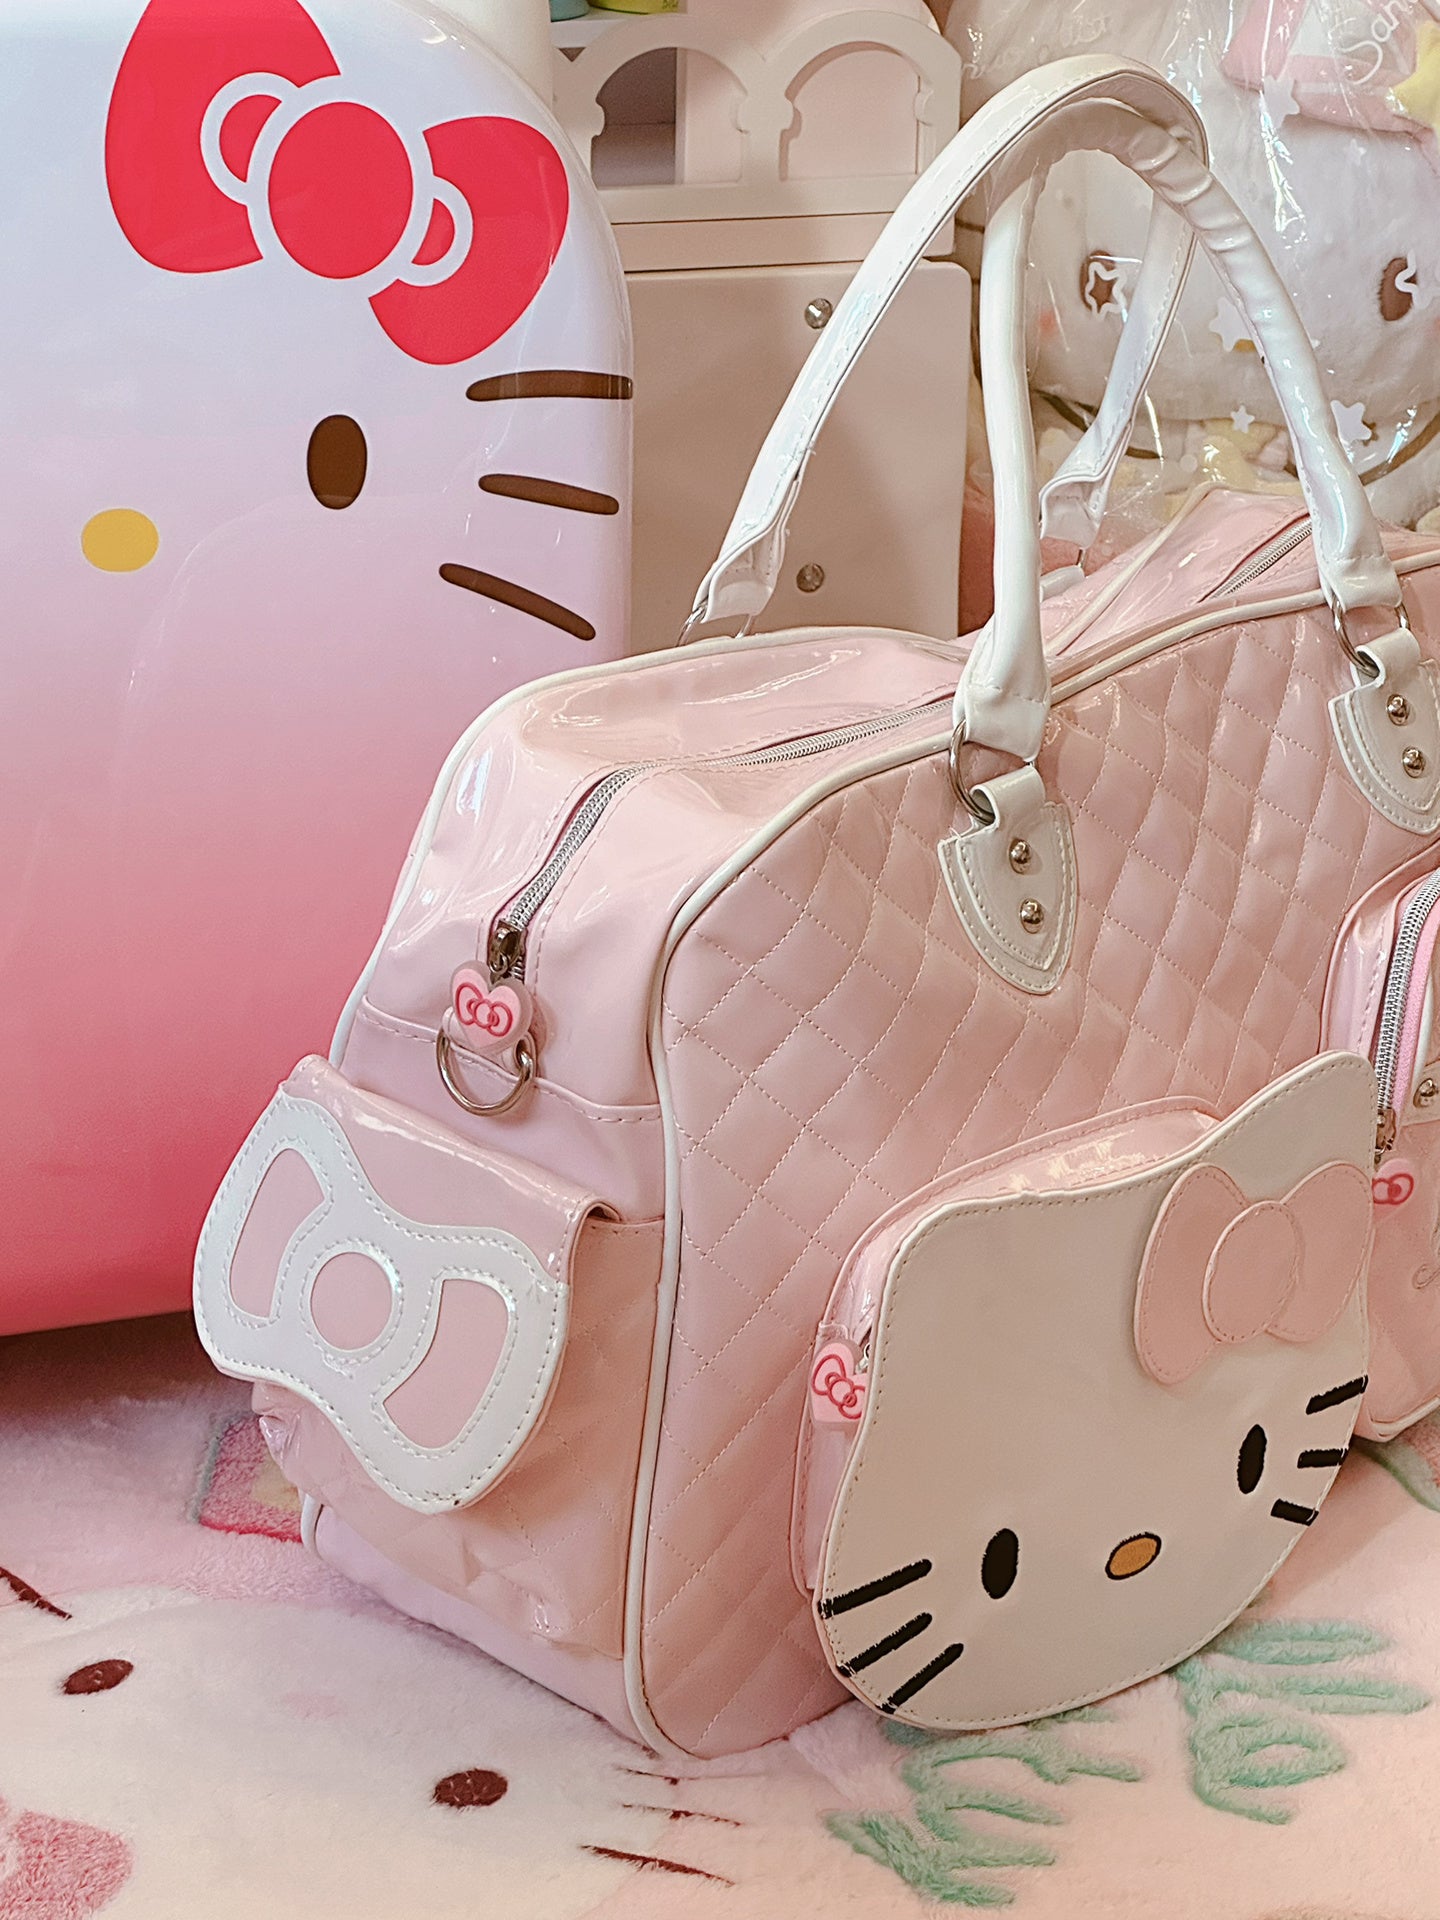 Hellokitty Weekender Bag for Women Cute PU Travel Tote Bag Gym